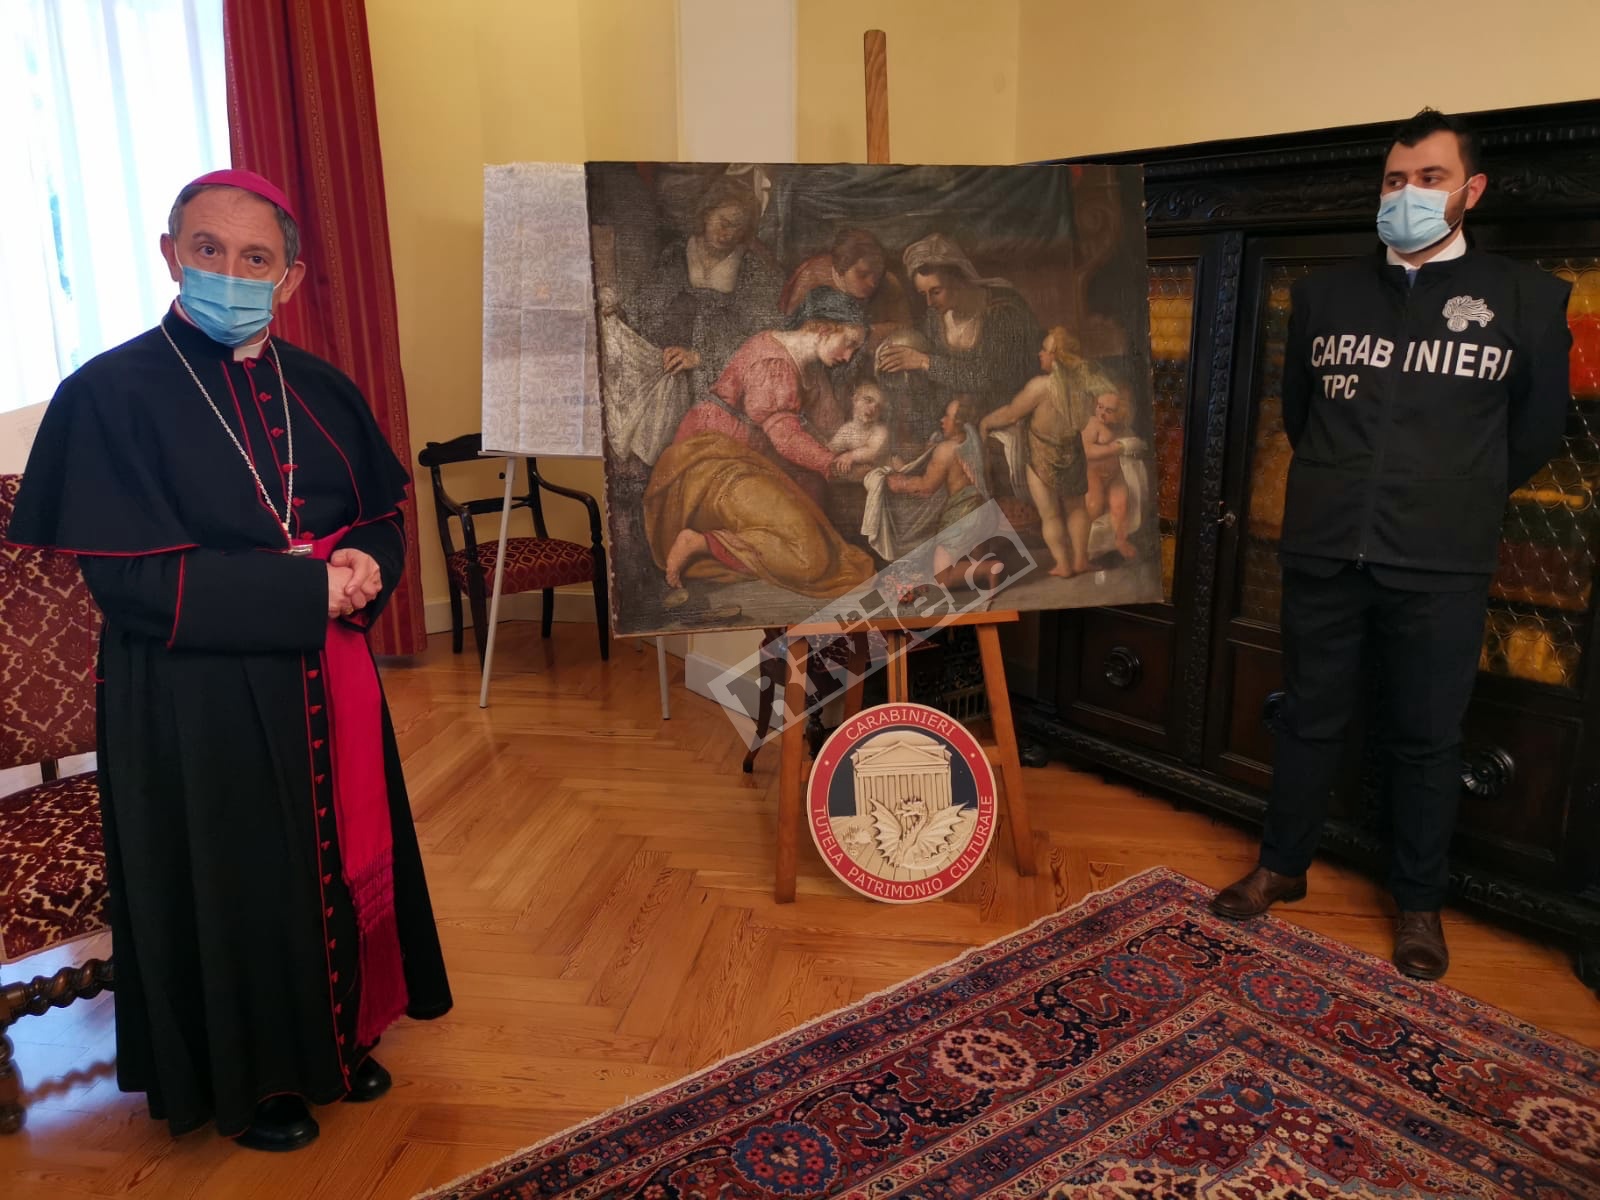 Diocesi-Pala-daltare-Madonna-vescovo-Suetta-carabinieri_05